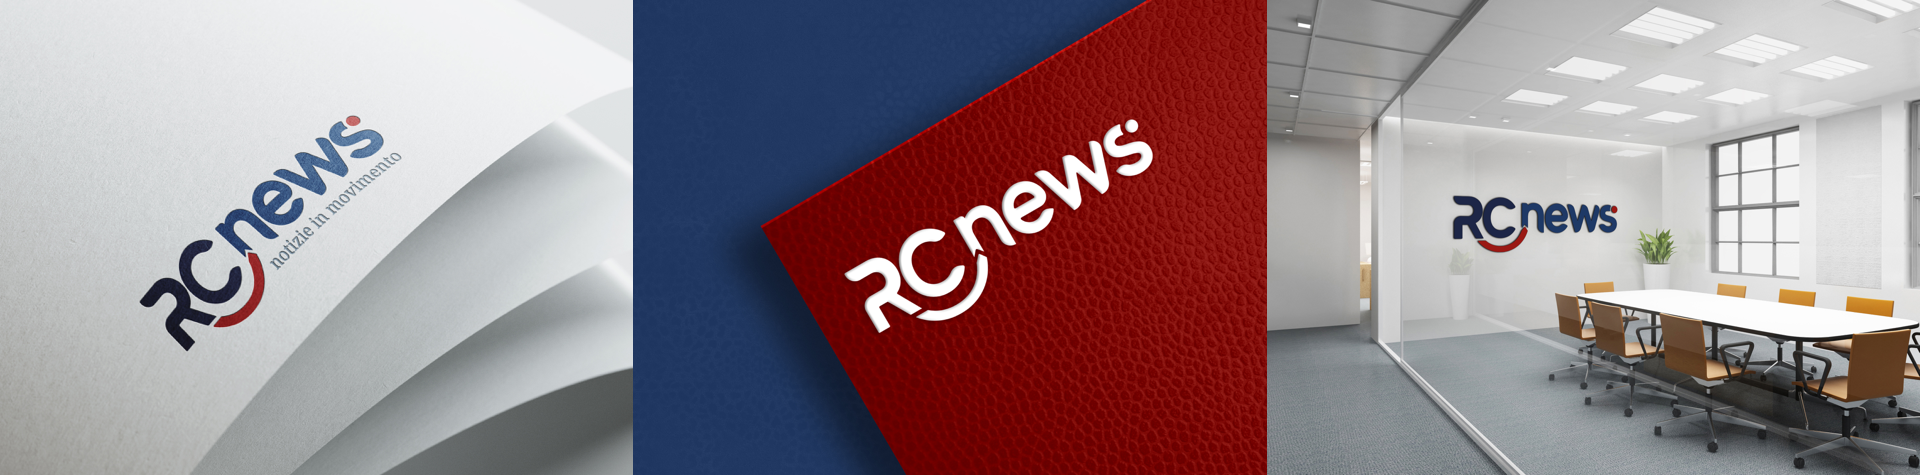 mockup-logo-rcnews